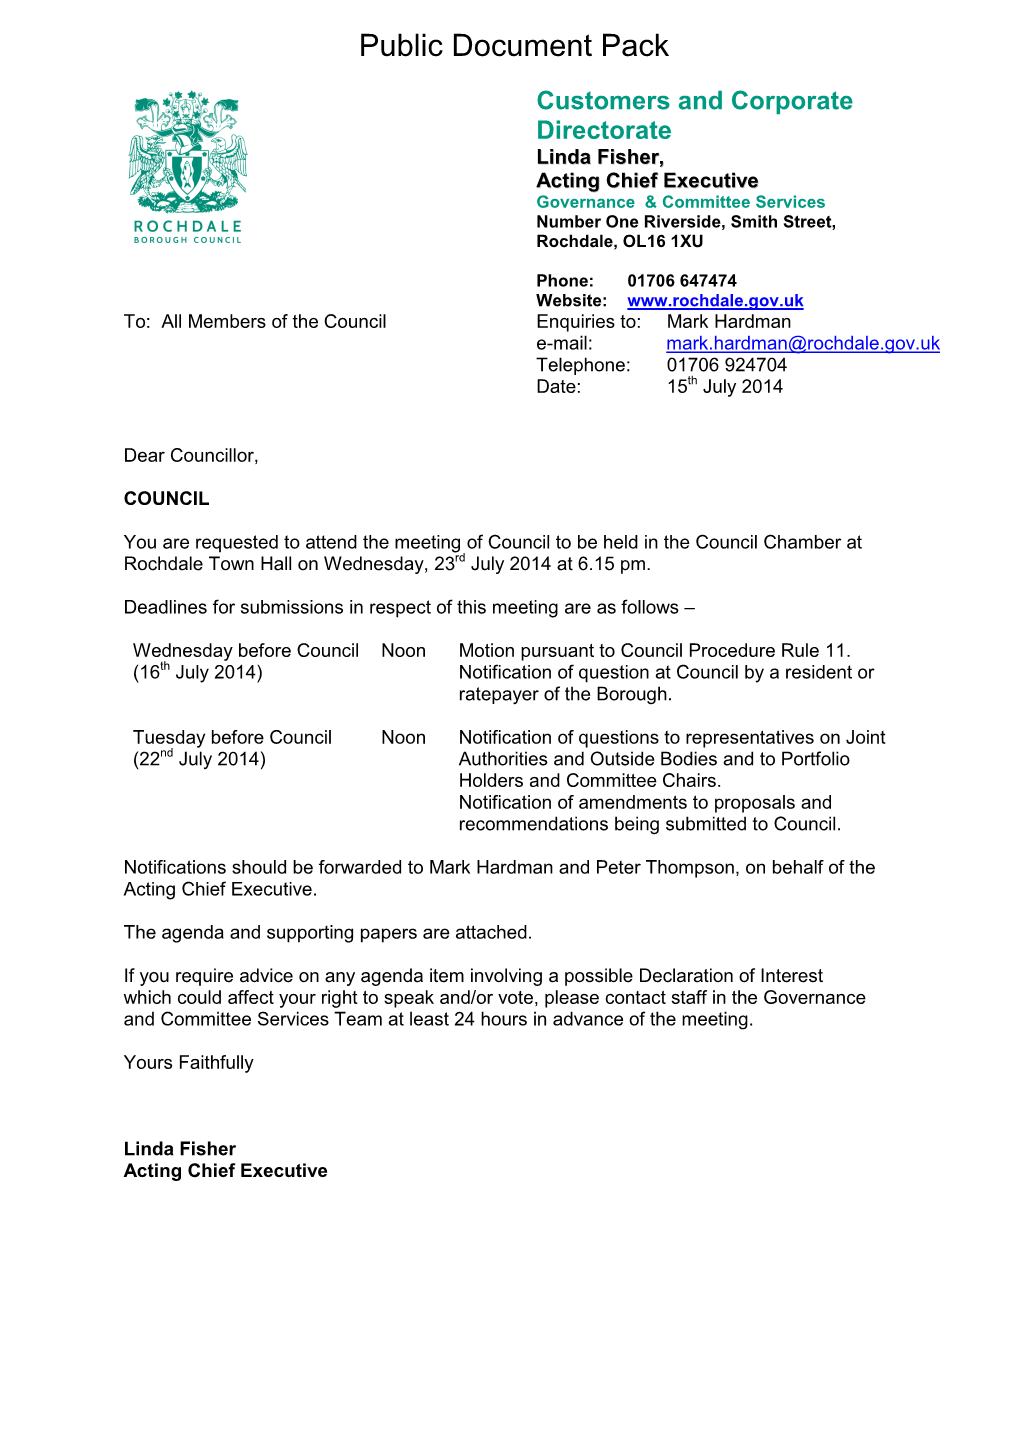 (Public Pack)Agenda Document for Council, 23/07/2014 18:15